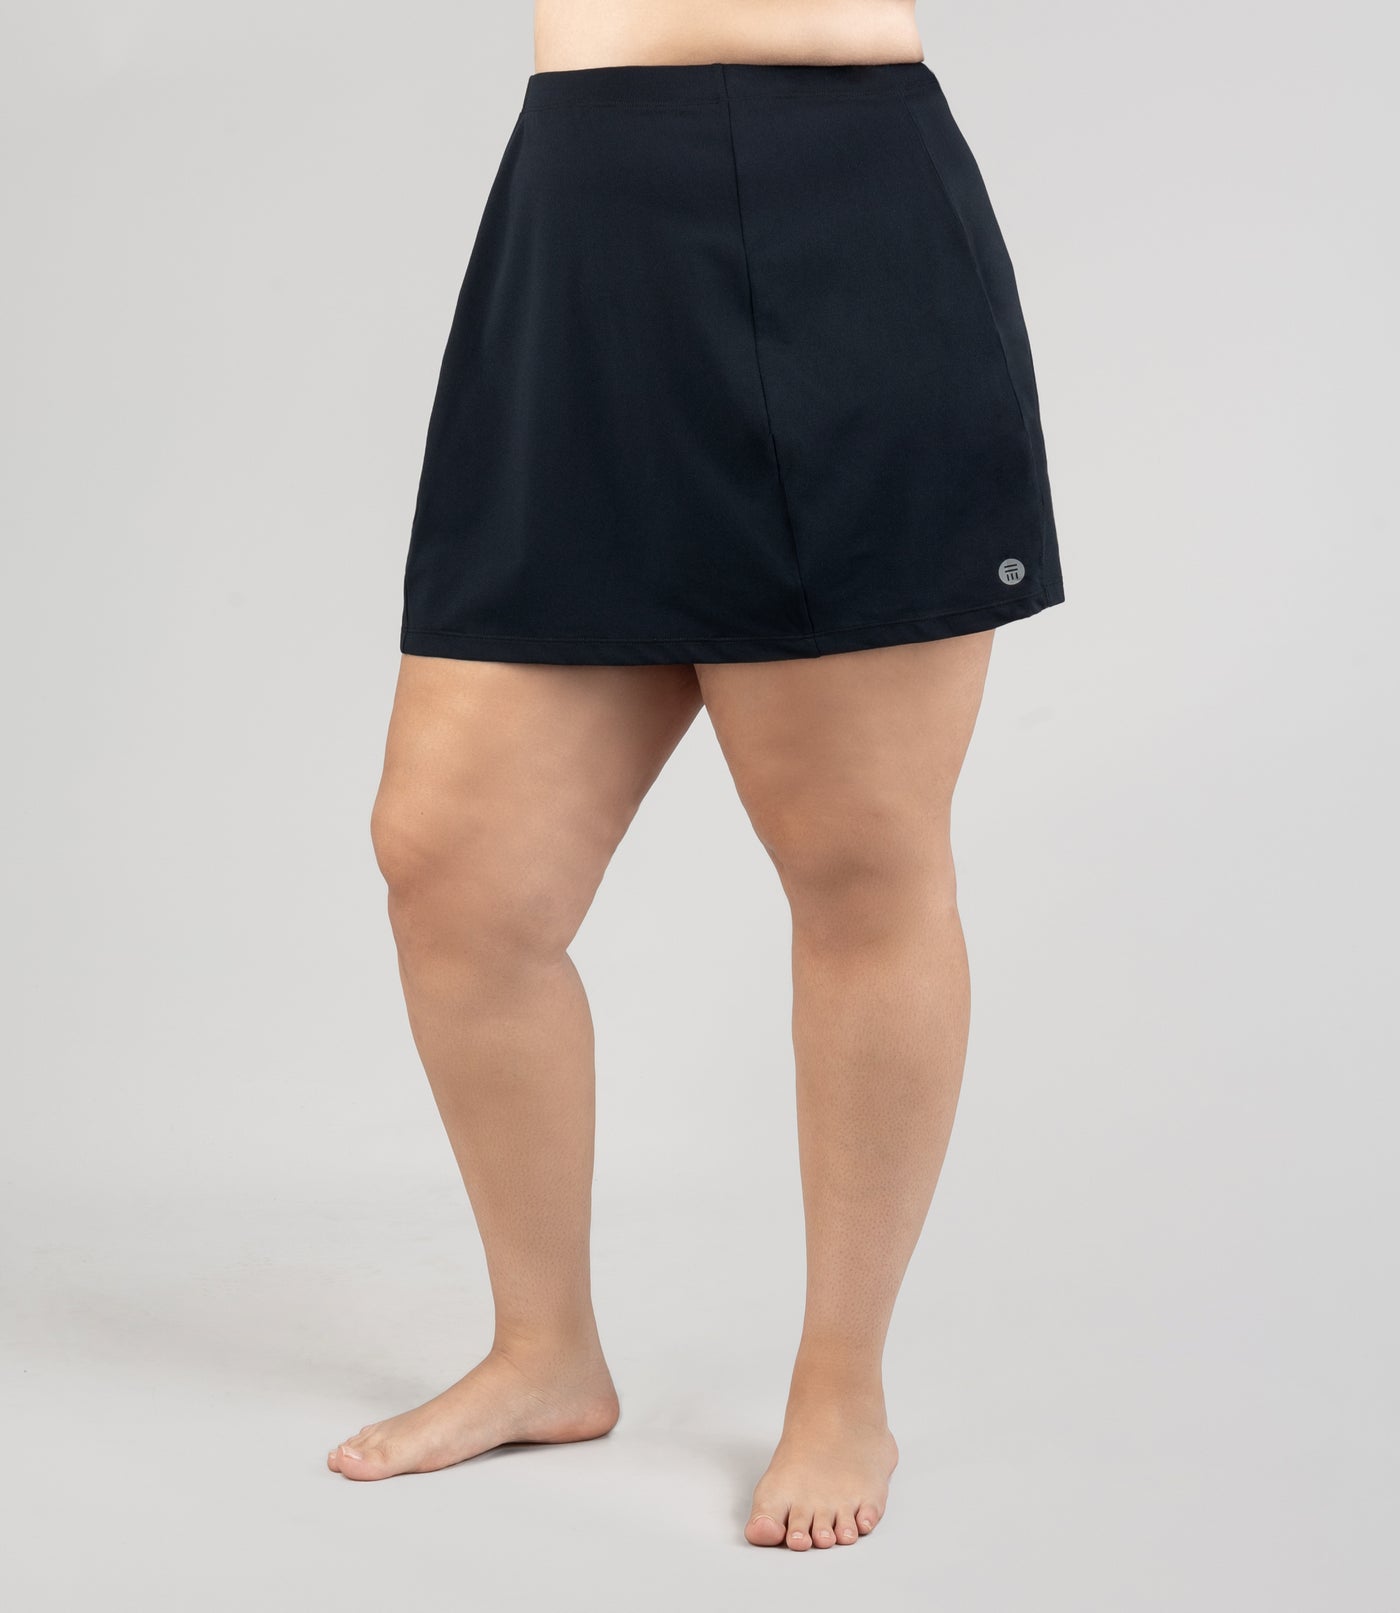 Model wearing JunoActive's Aquasport Swim Cover Skirt in color black.